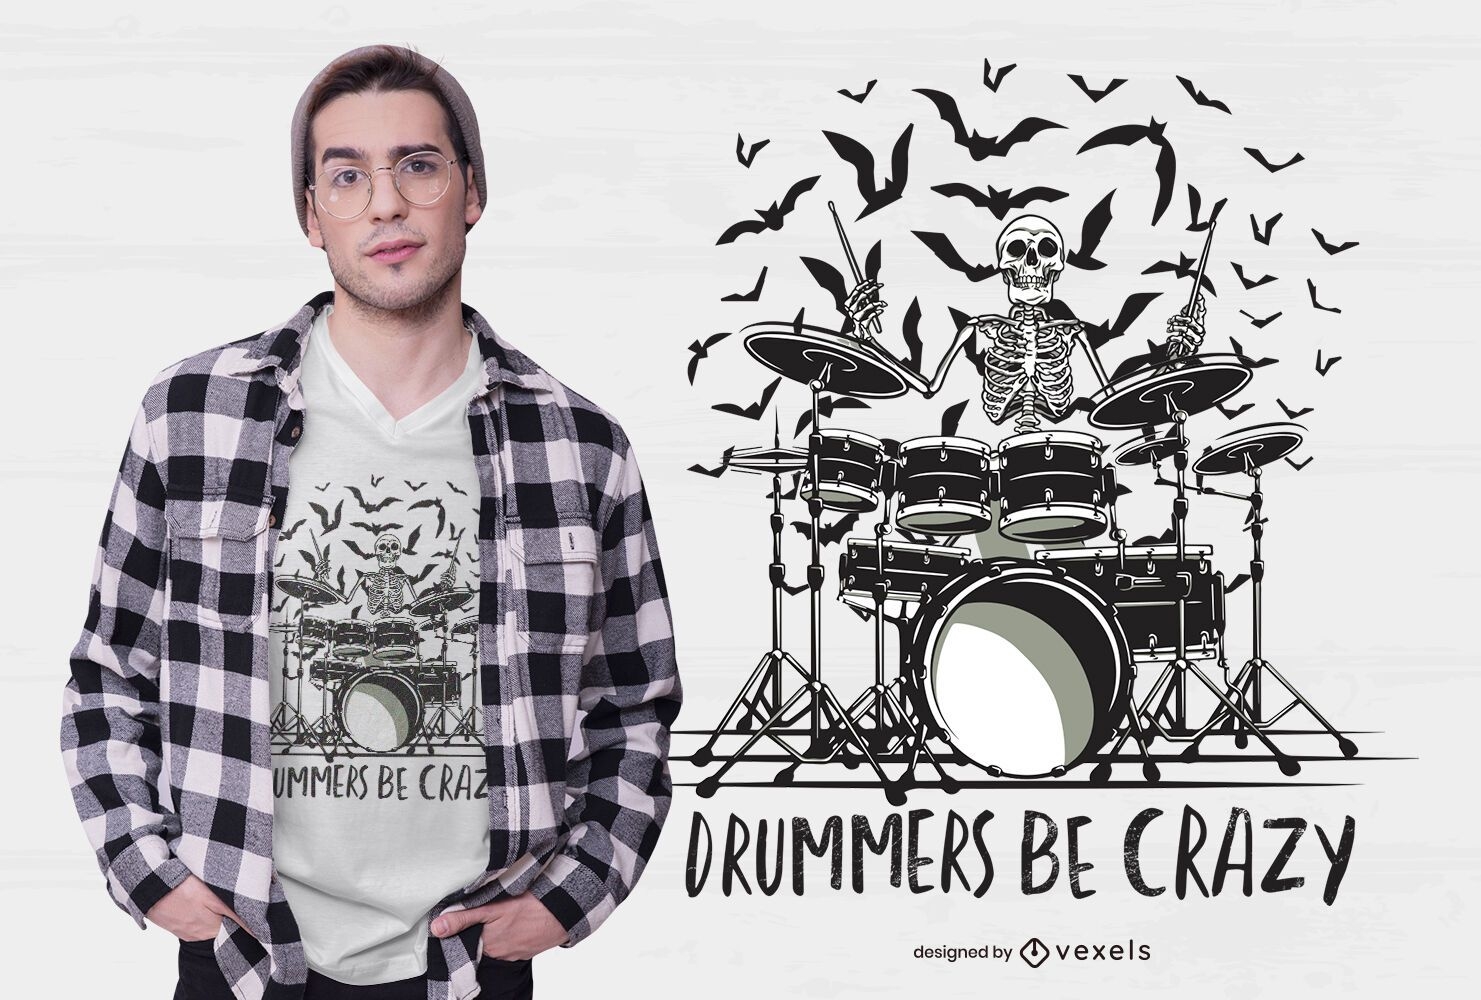 Drummers be crazy t-shirt design